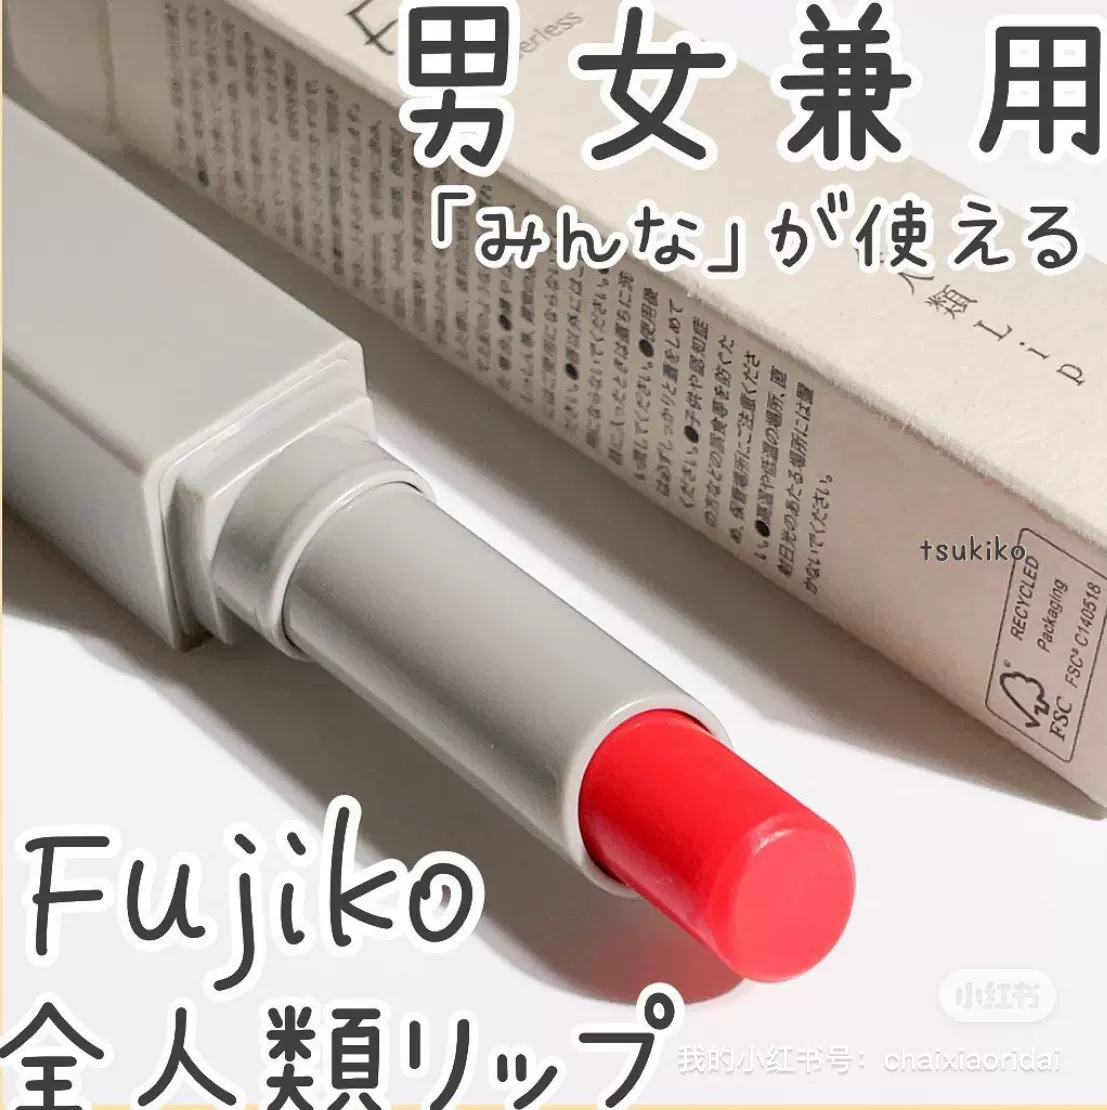 Fujiko フジコ 全人類 早割クーポン - 口紅